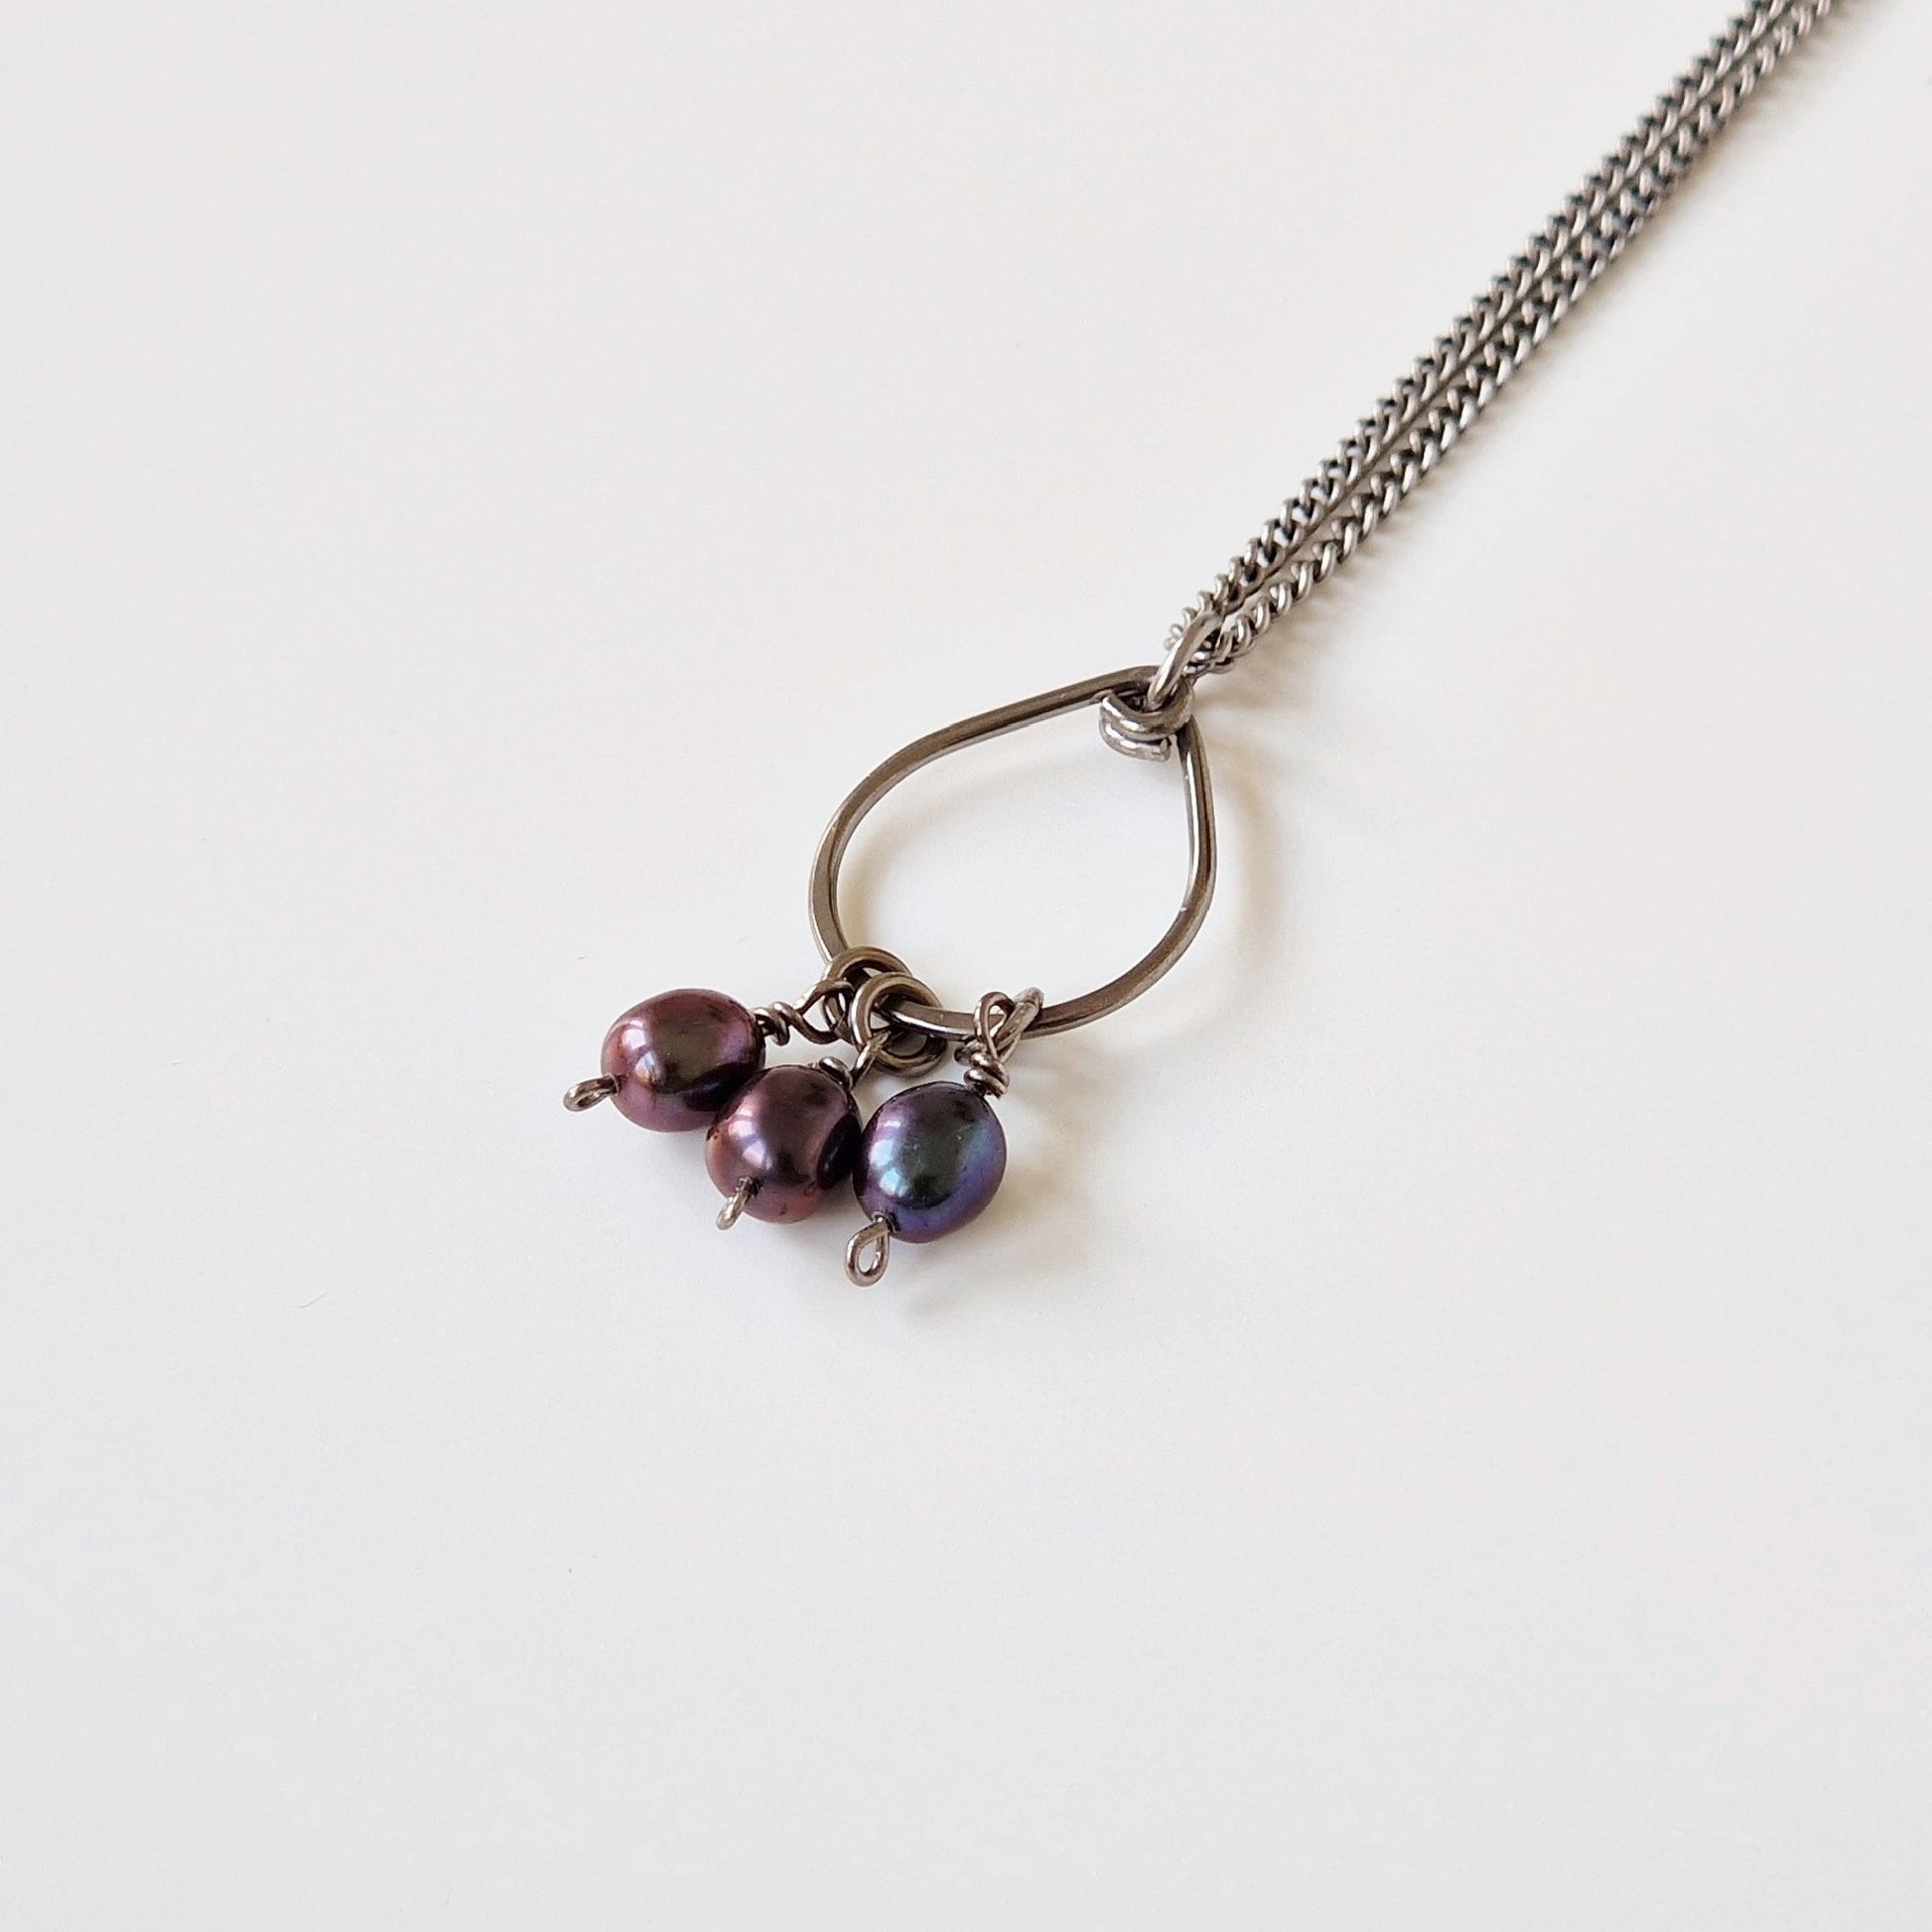 Titanium Teardrop Necklace with Black Pearls